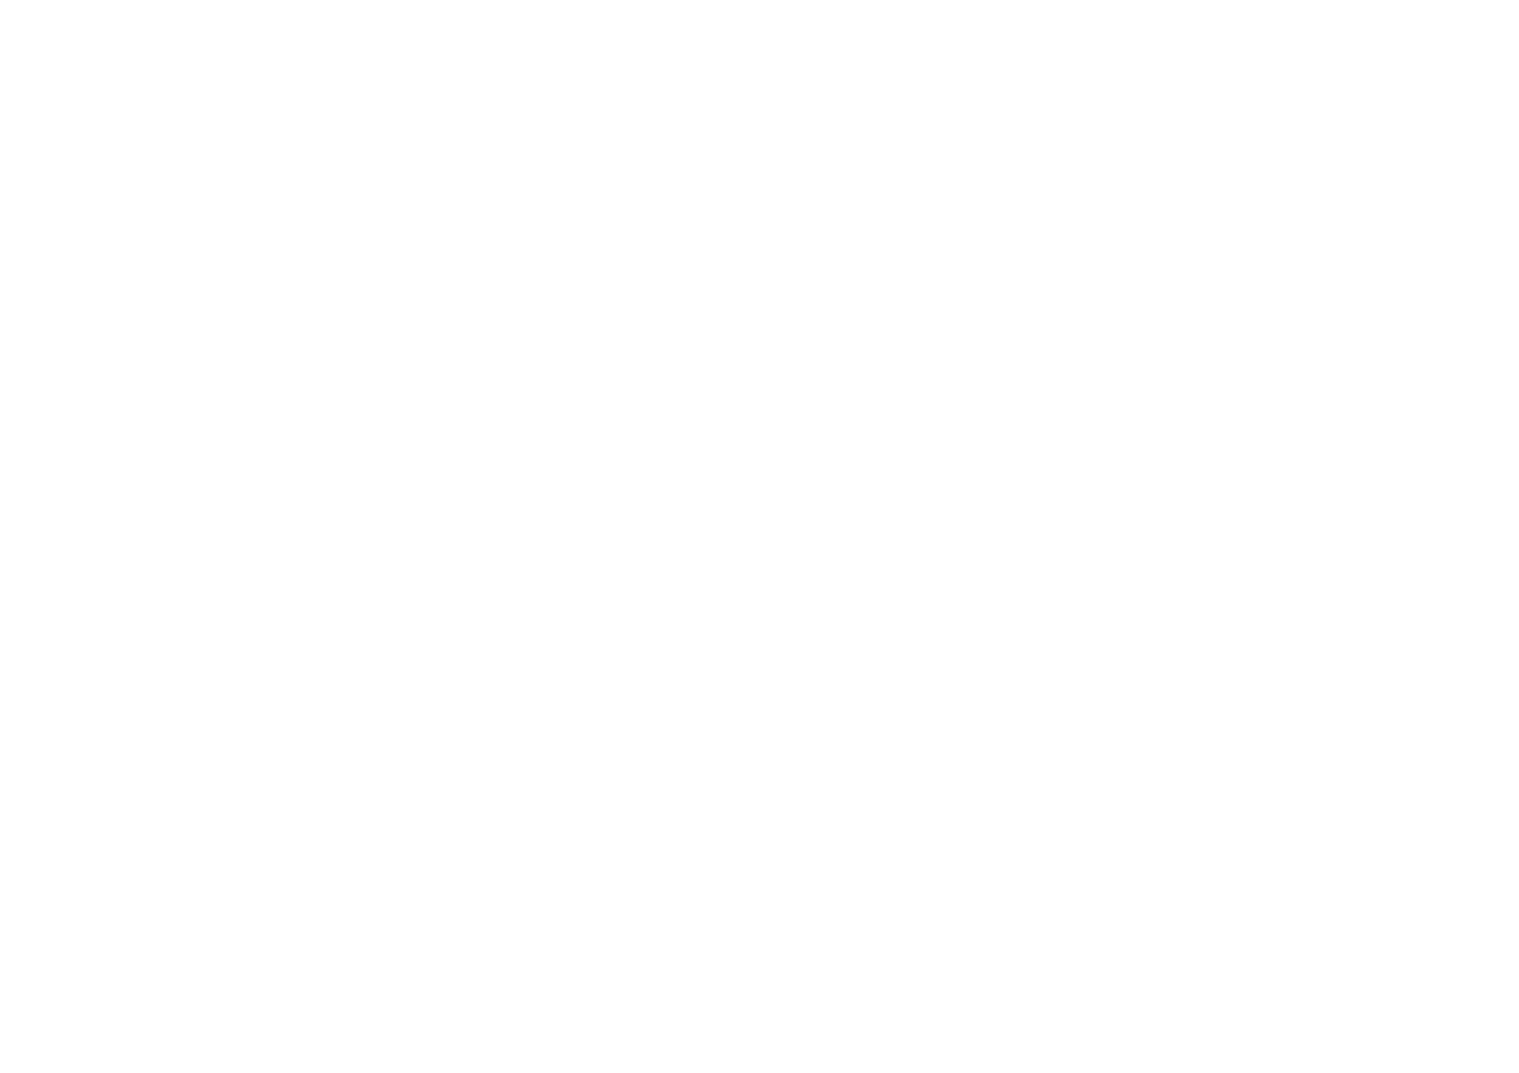 Irma Vep logo